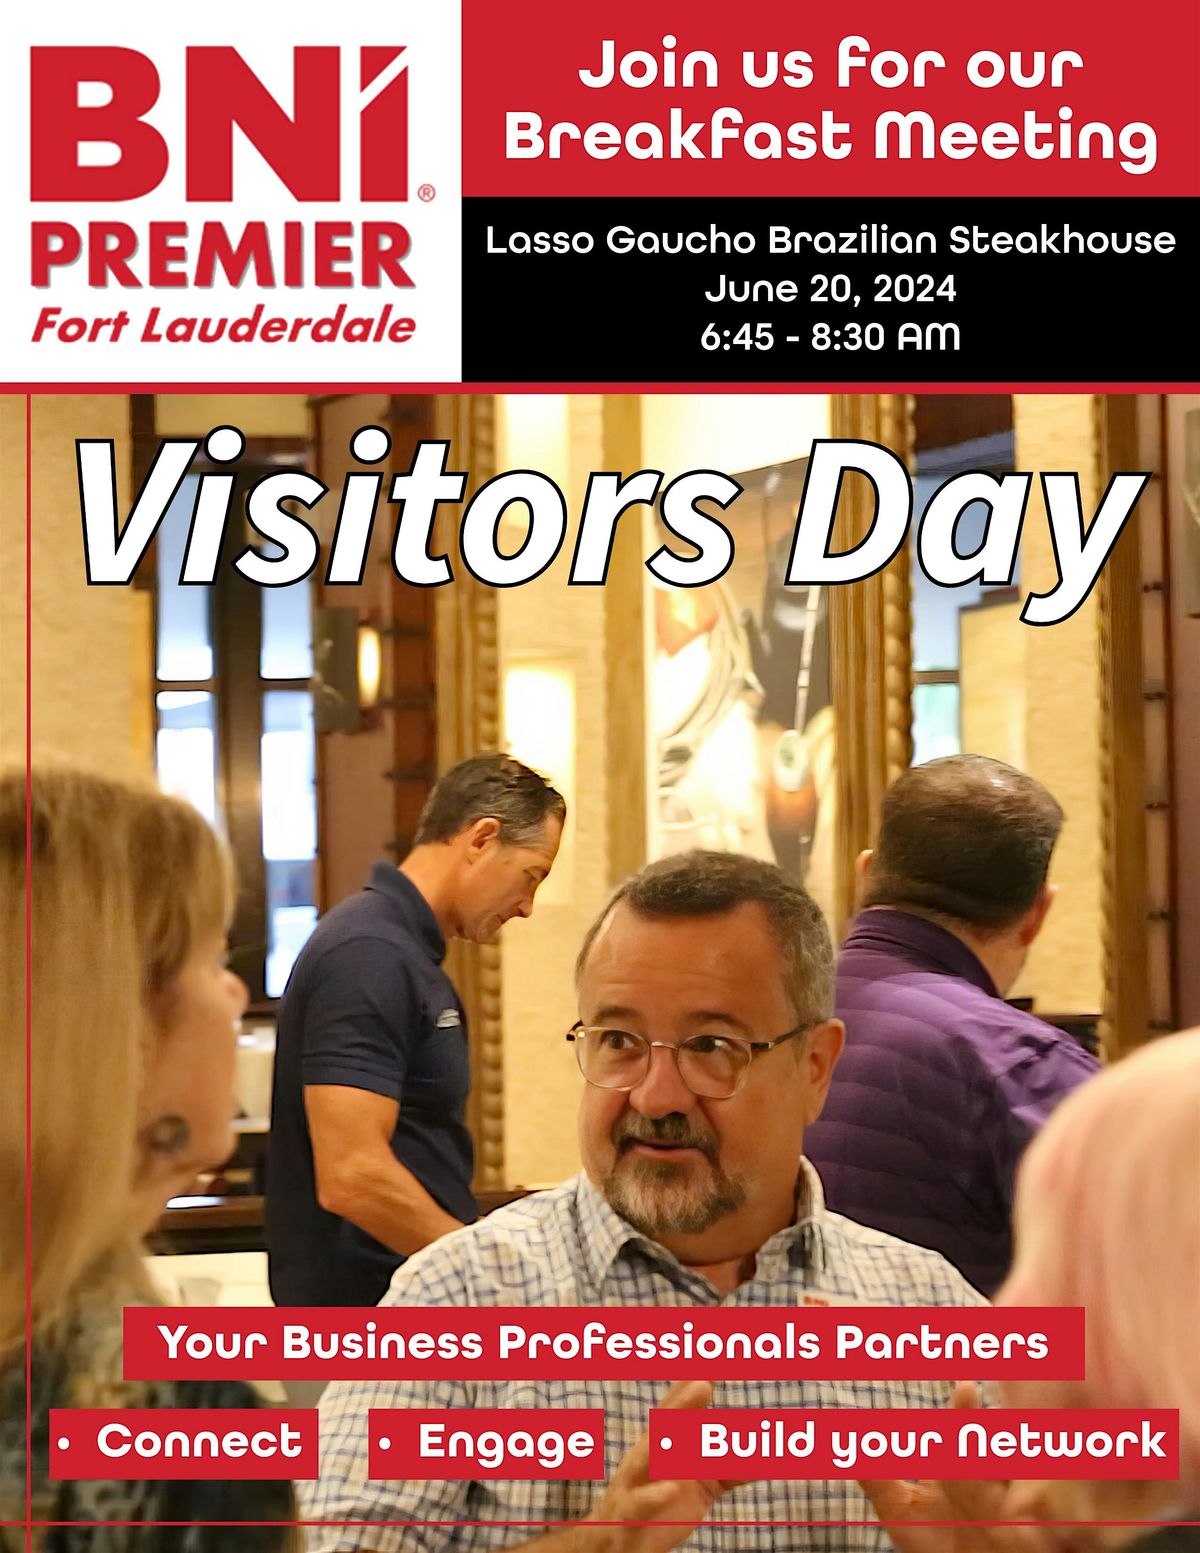 BNI Premier Networking Event - Visitors Day